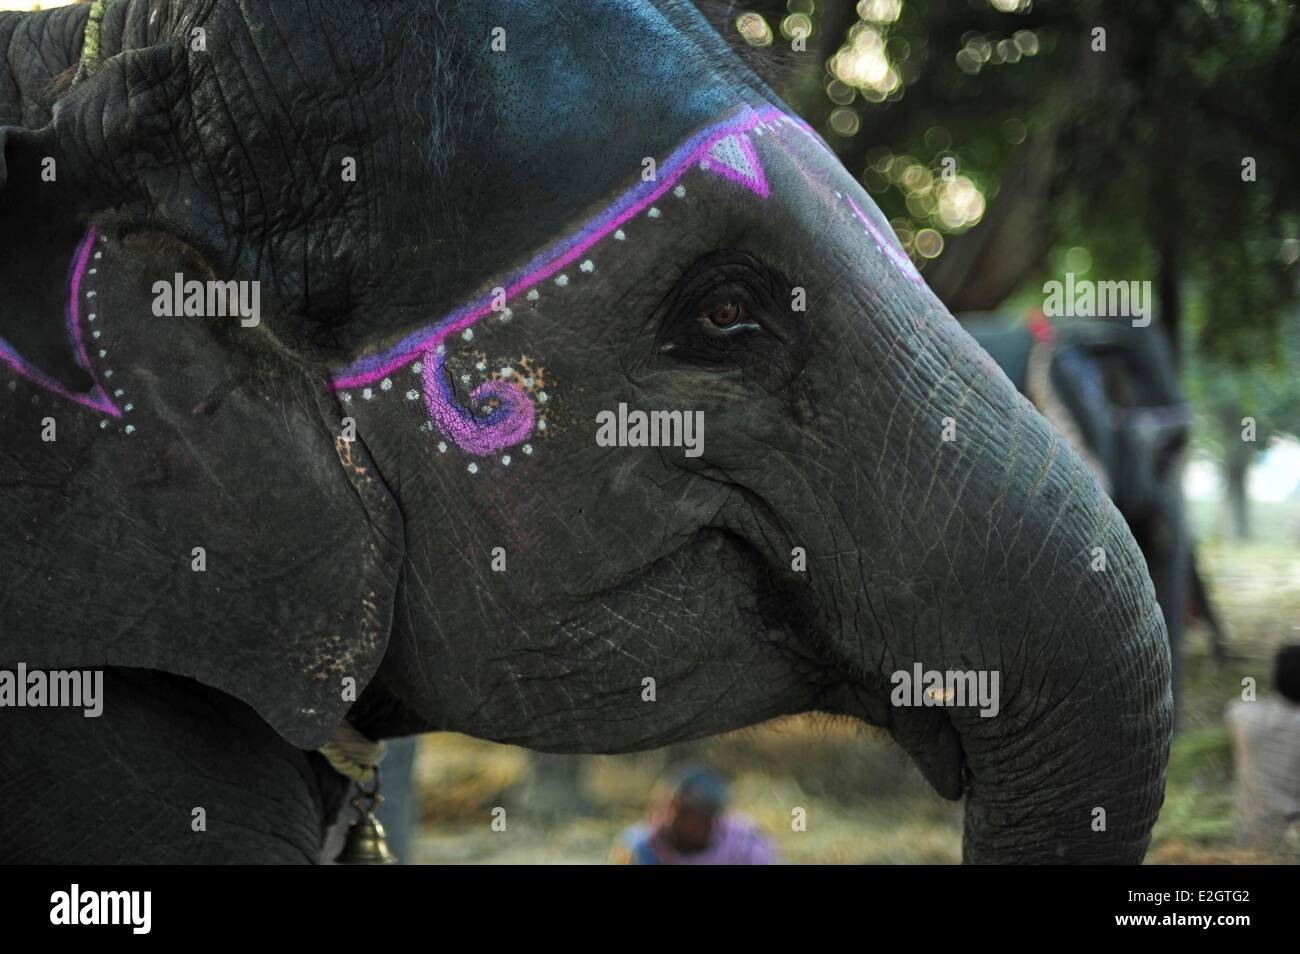 India Bihar state Patna Sonepur Sonepur Mela Cattle Fait (largest in Asia)  elephant market Stock Photo - Alamy